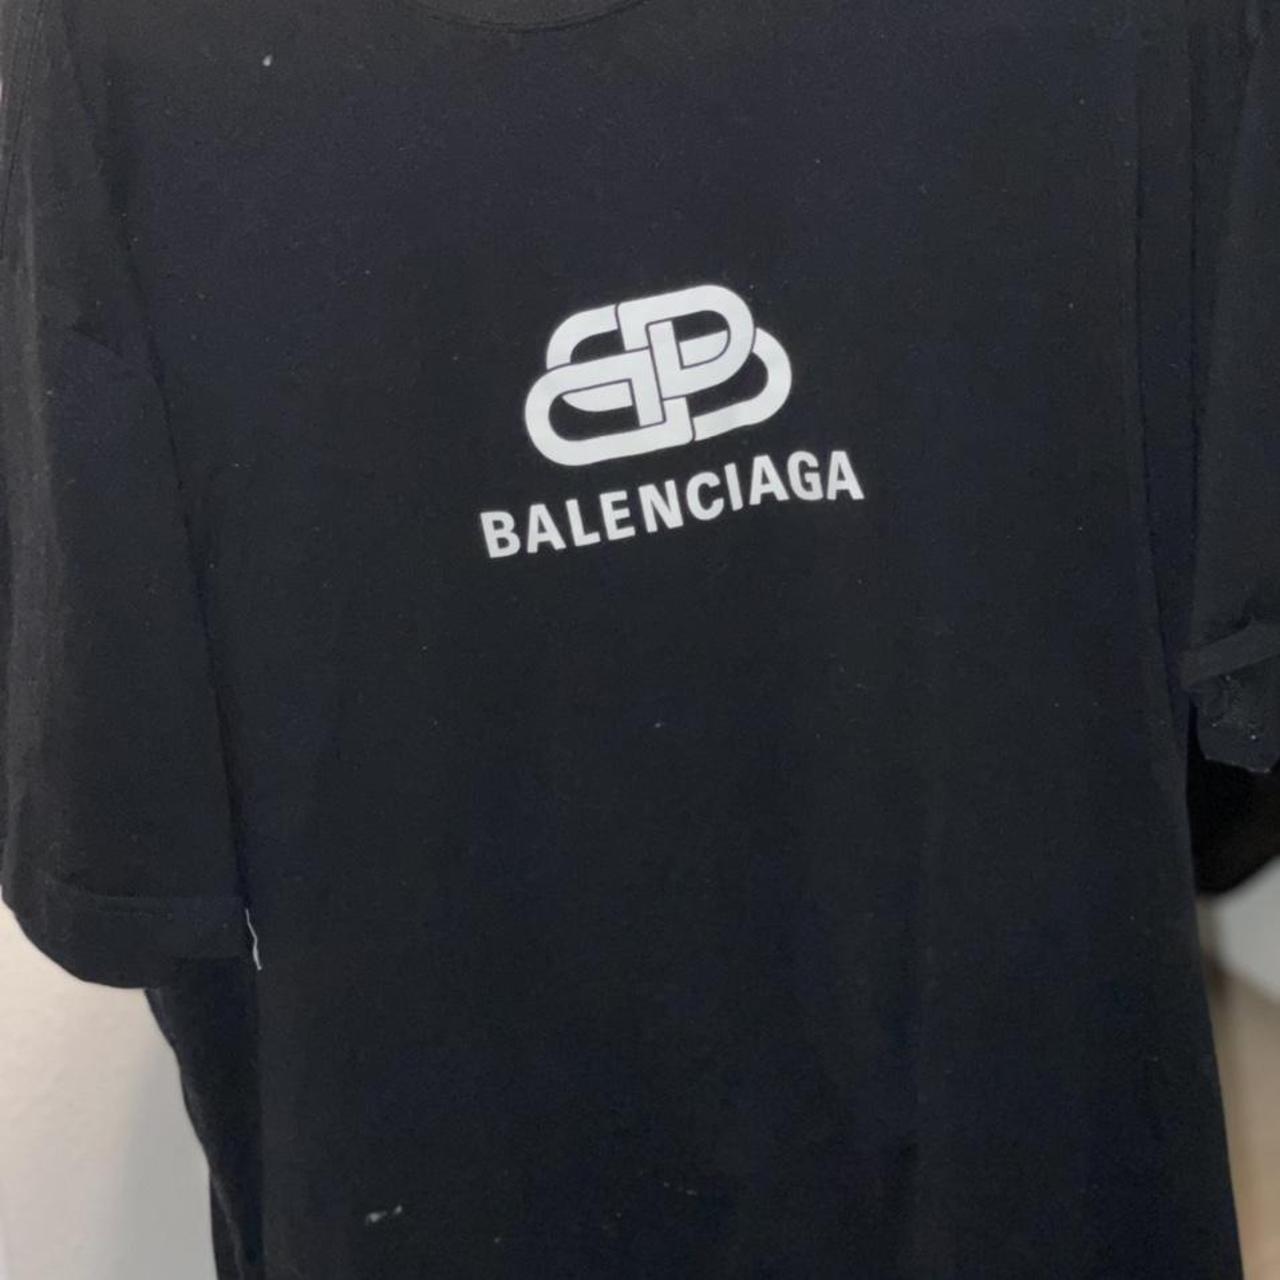 Balenciaga fashion institute designer unisex T-shirt - Depop